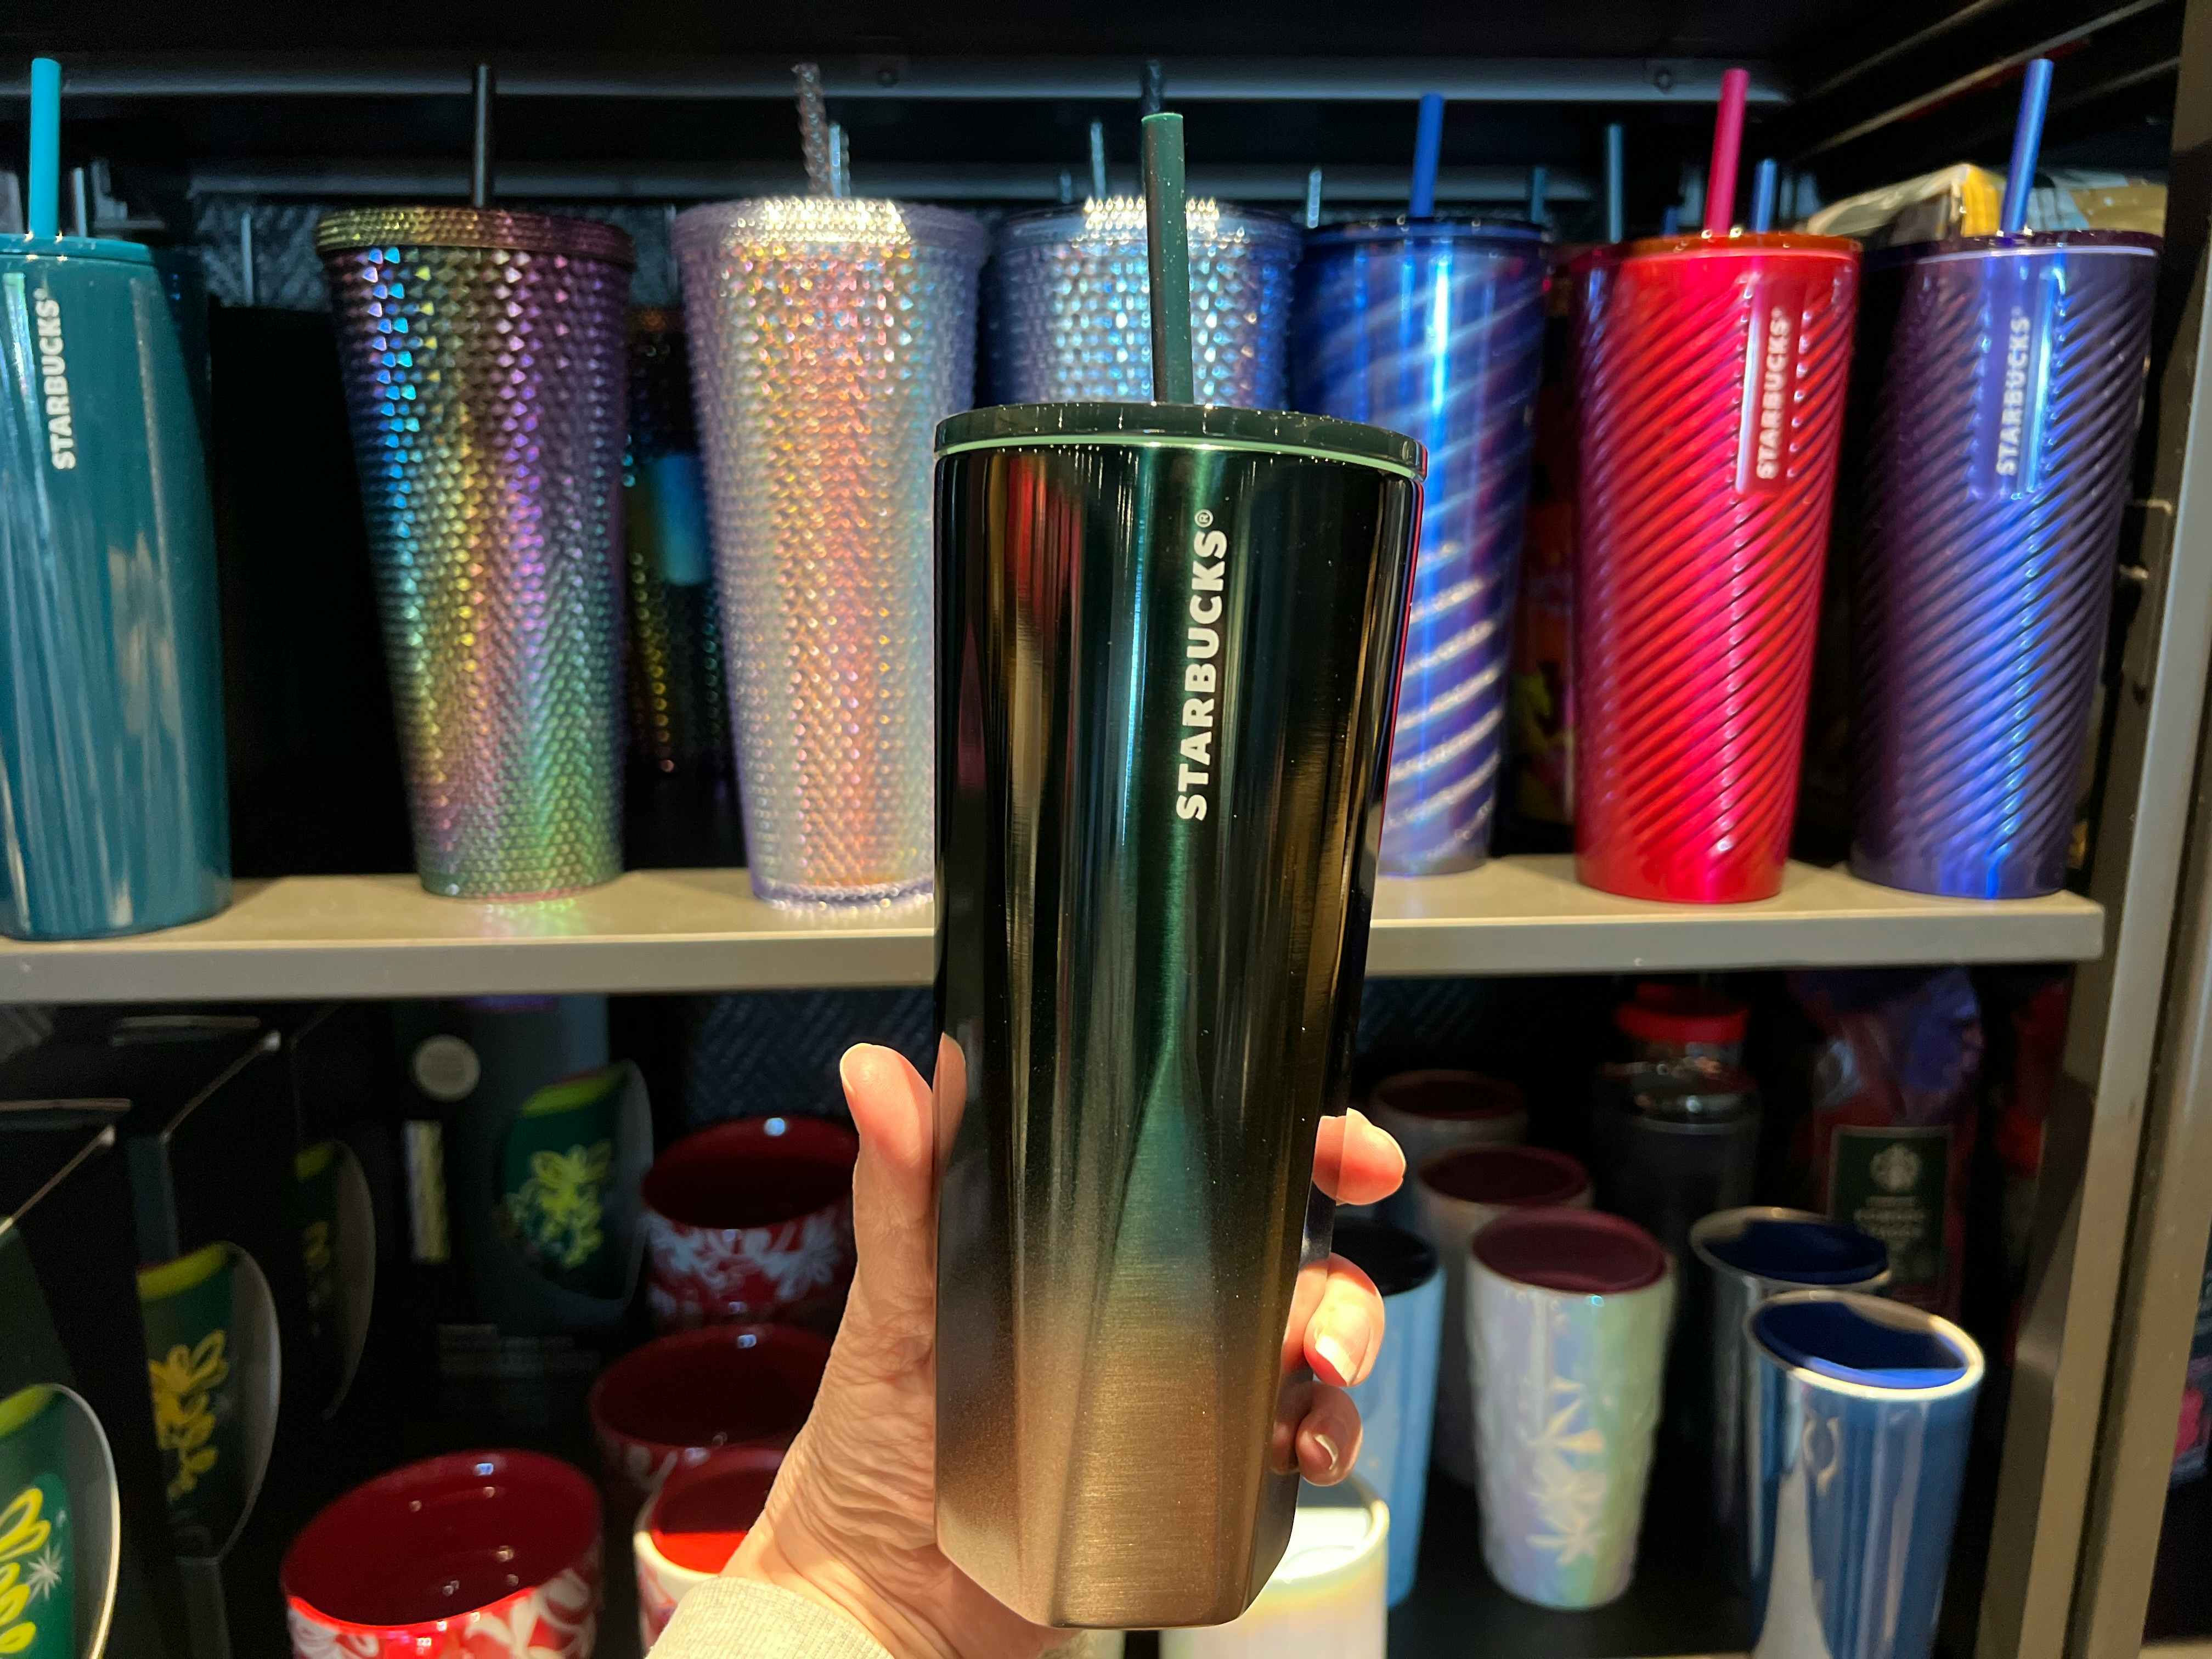 Hot Sale Promotional Stainless Steel Drinkware Cup of Coffee Starbucks Mug  - China Starbucks Coffee Mug and Stainless Steel Drinkware price